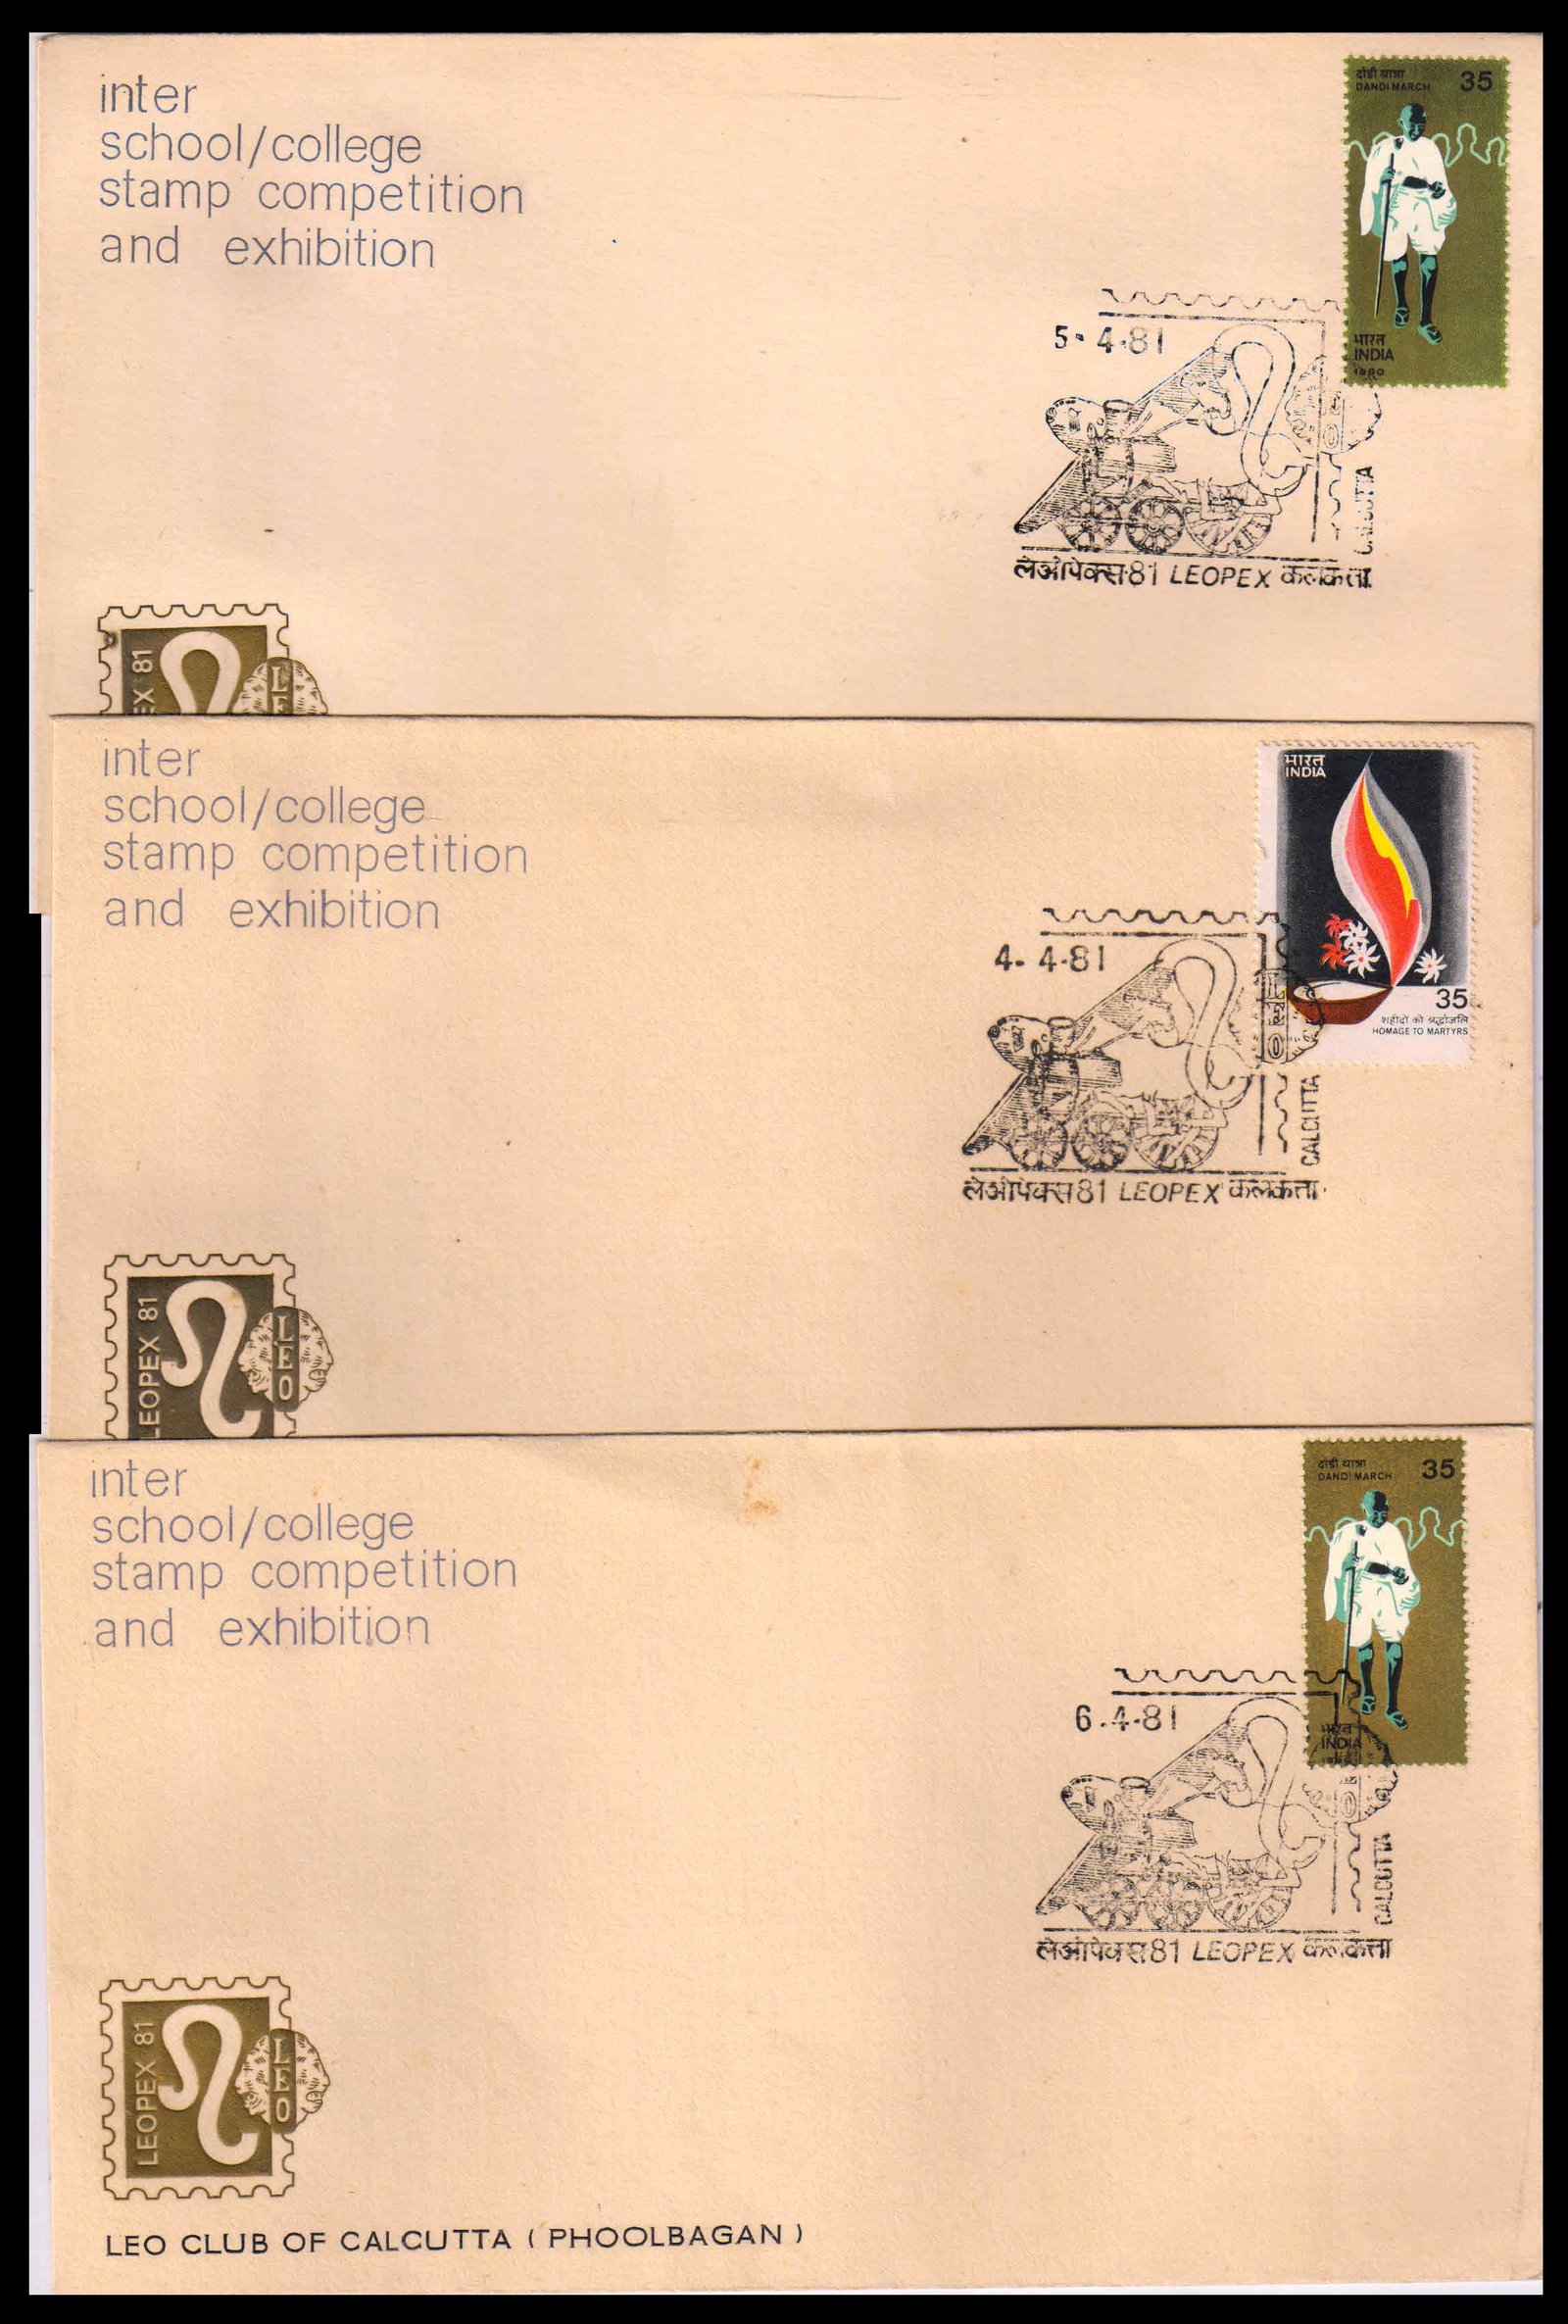 INDIA LEOPEX 81, Inter School/College Stamp Exhibition. Leo Club of Calcutta. Set of 3 Covers 